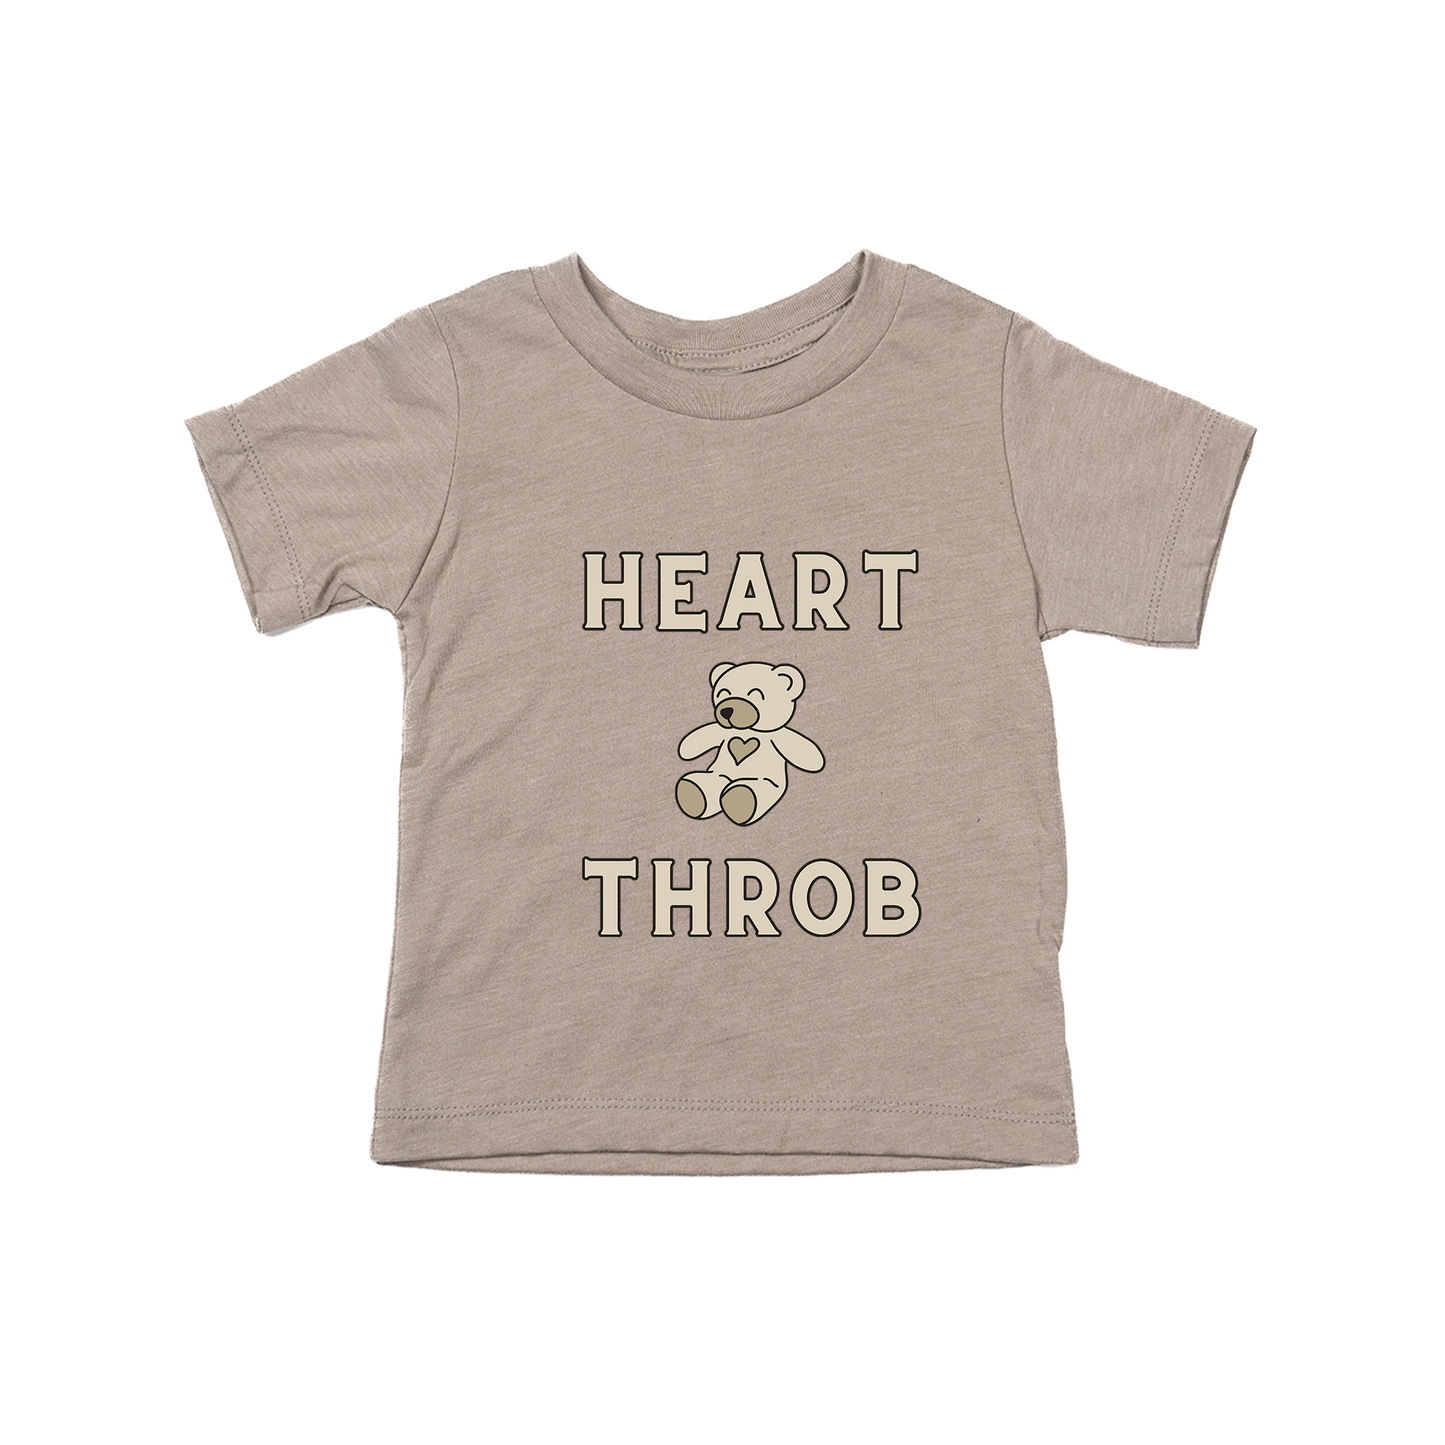 Heart Throb - Kids Tee (Pale Moss)